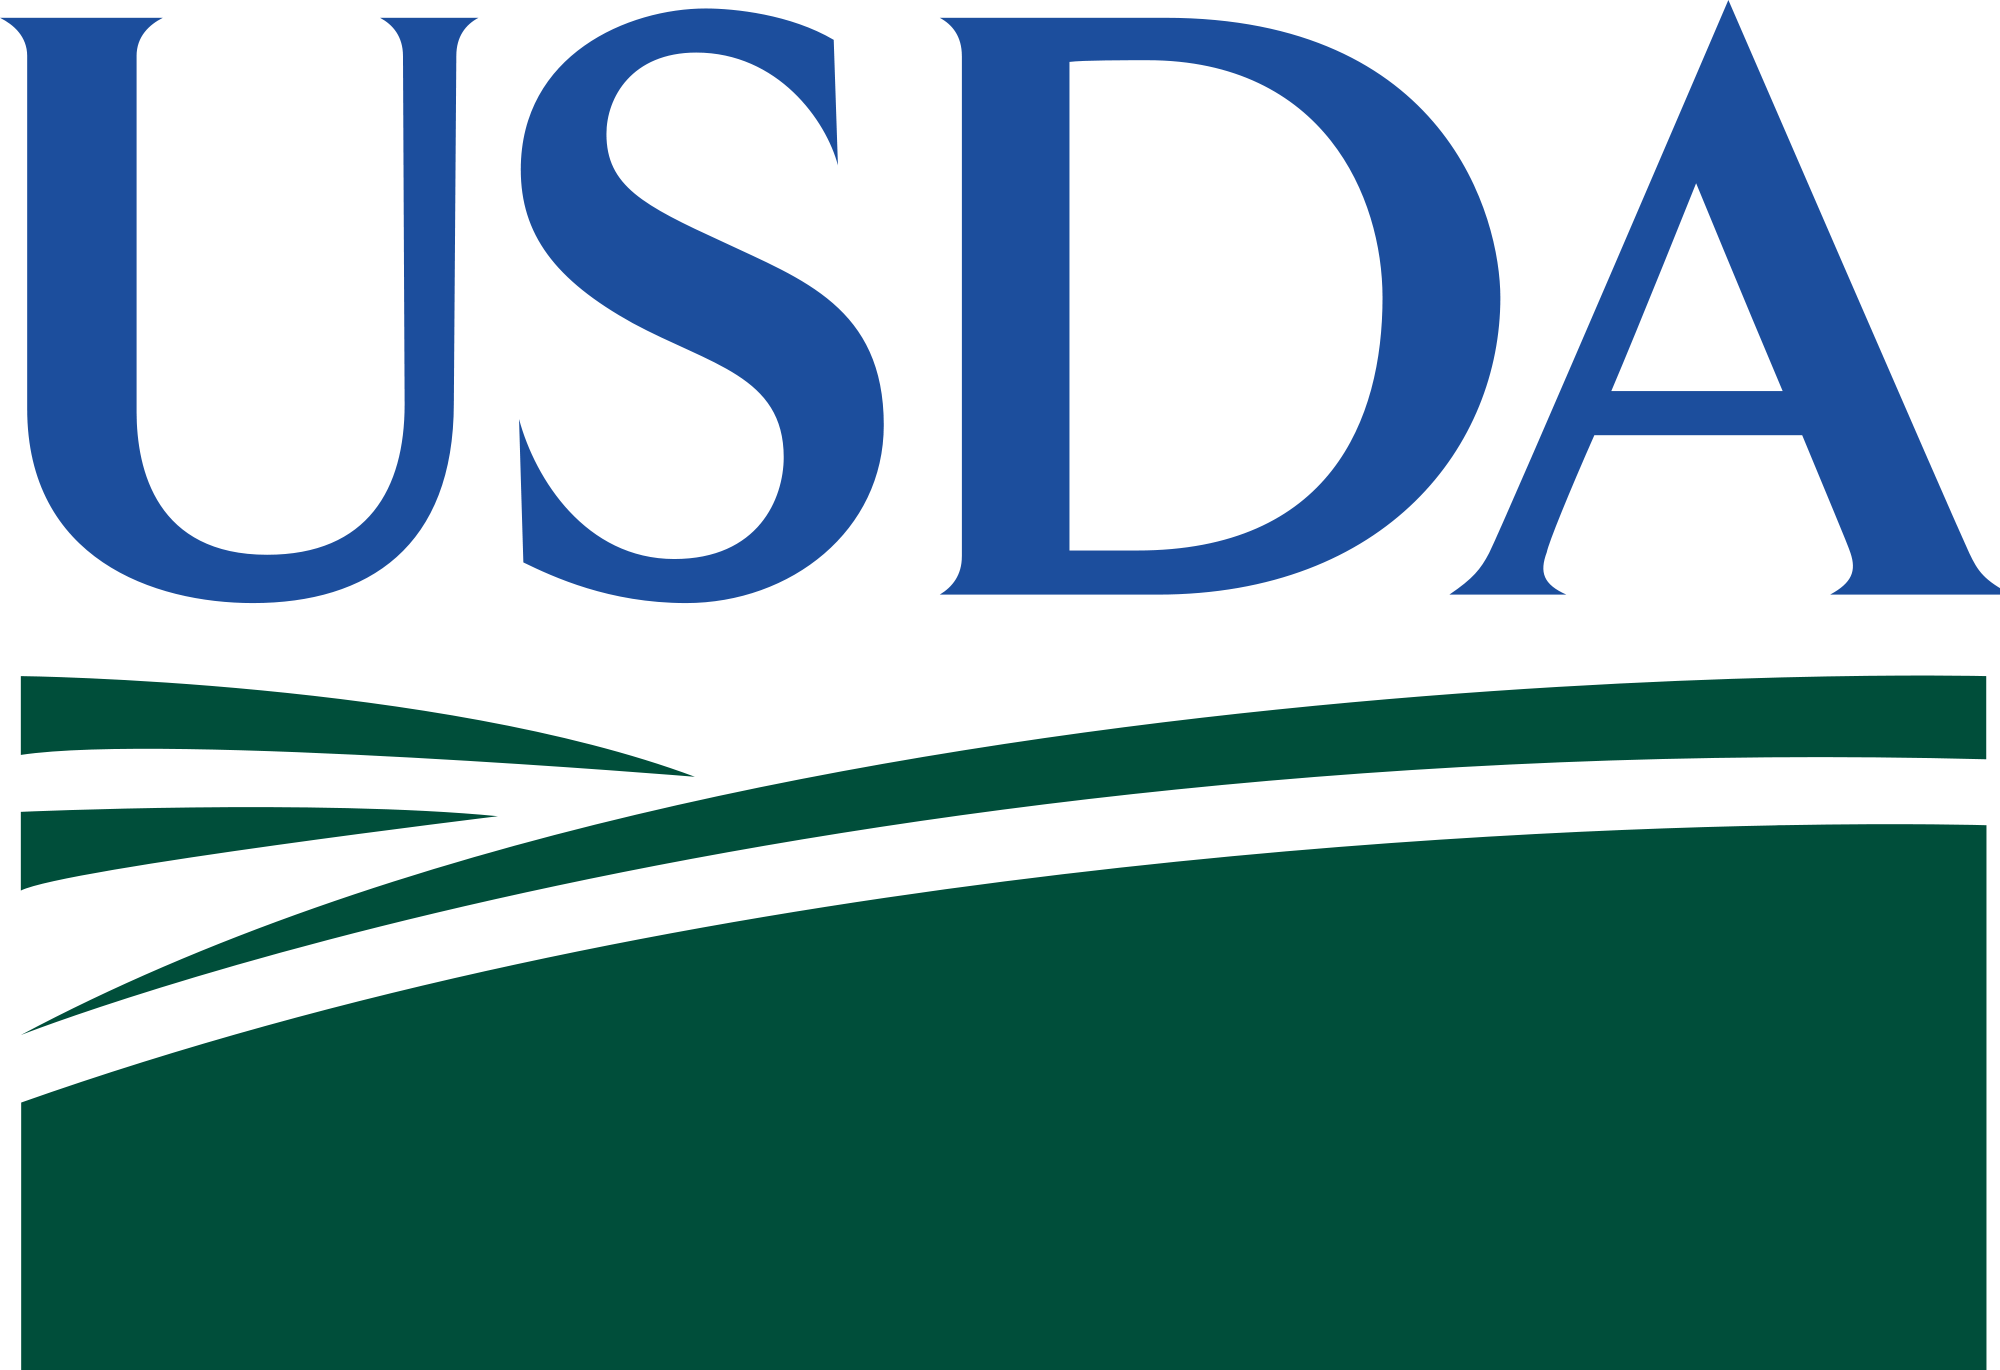 USDA written in blue lettering above green hills